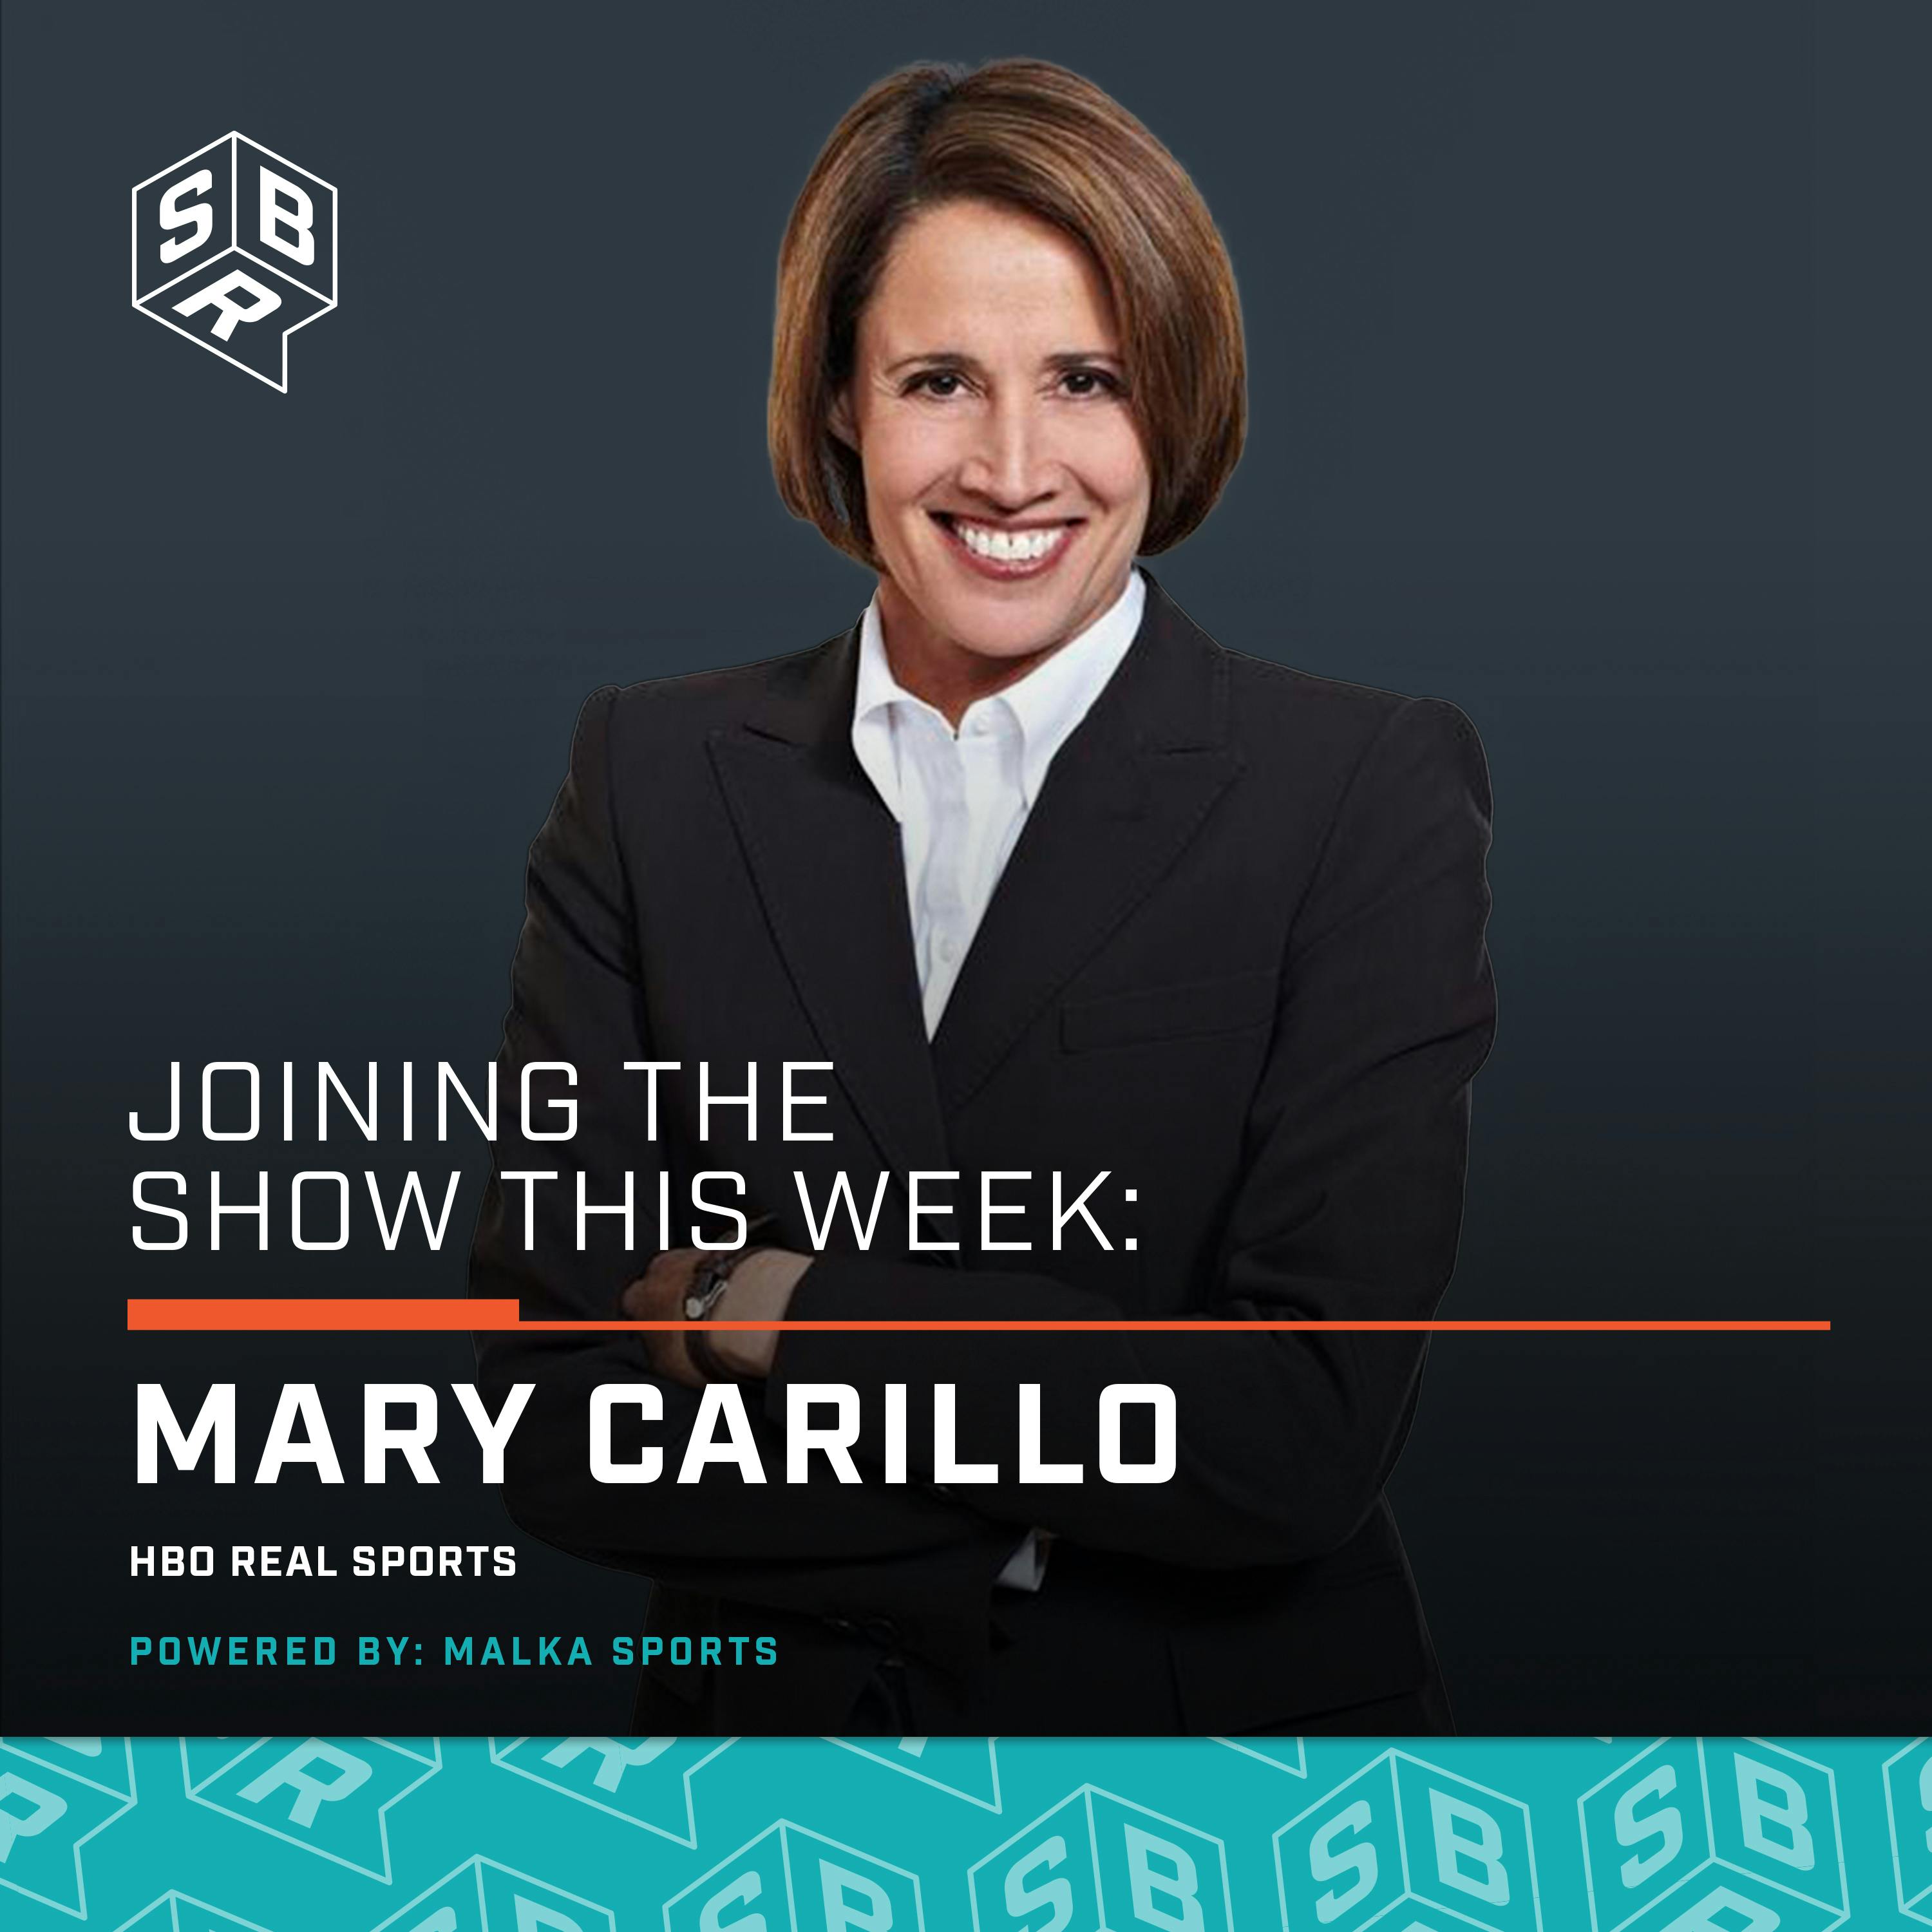 Mary Carillo - HBO Real Sports & NBC Olympic Correspondent